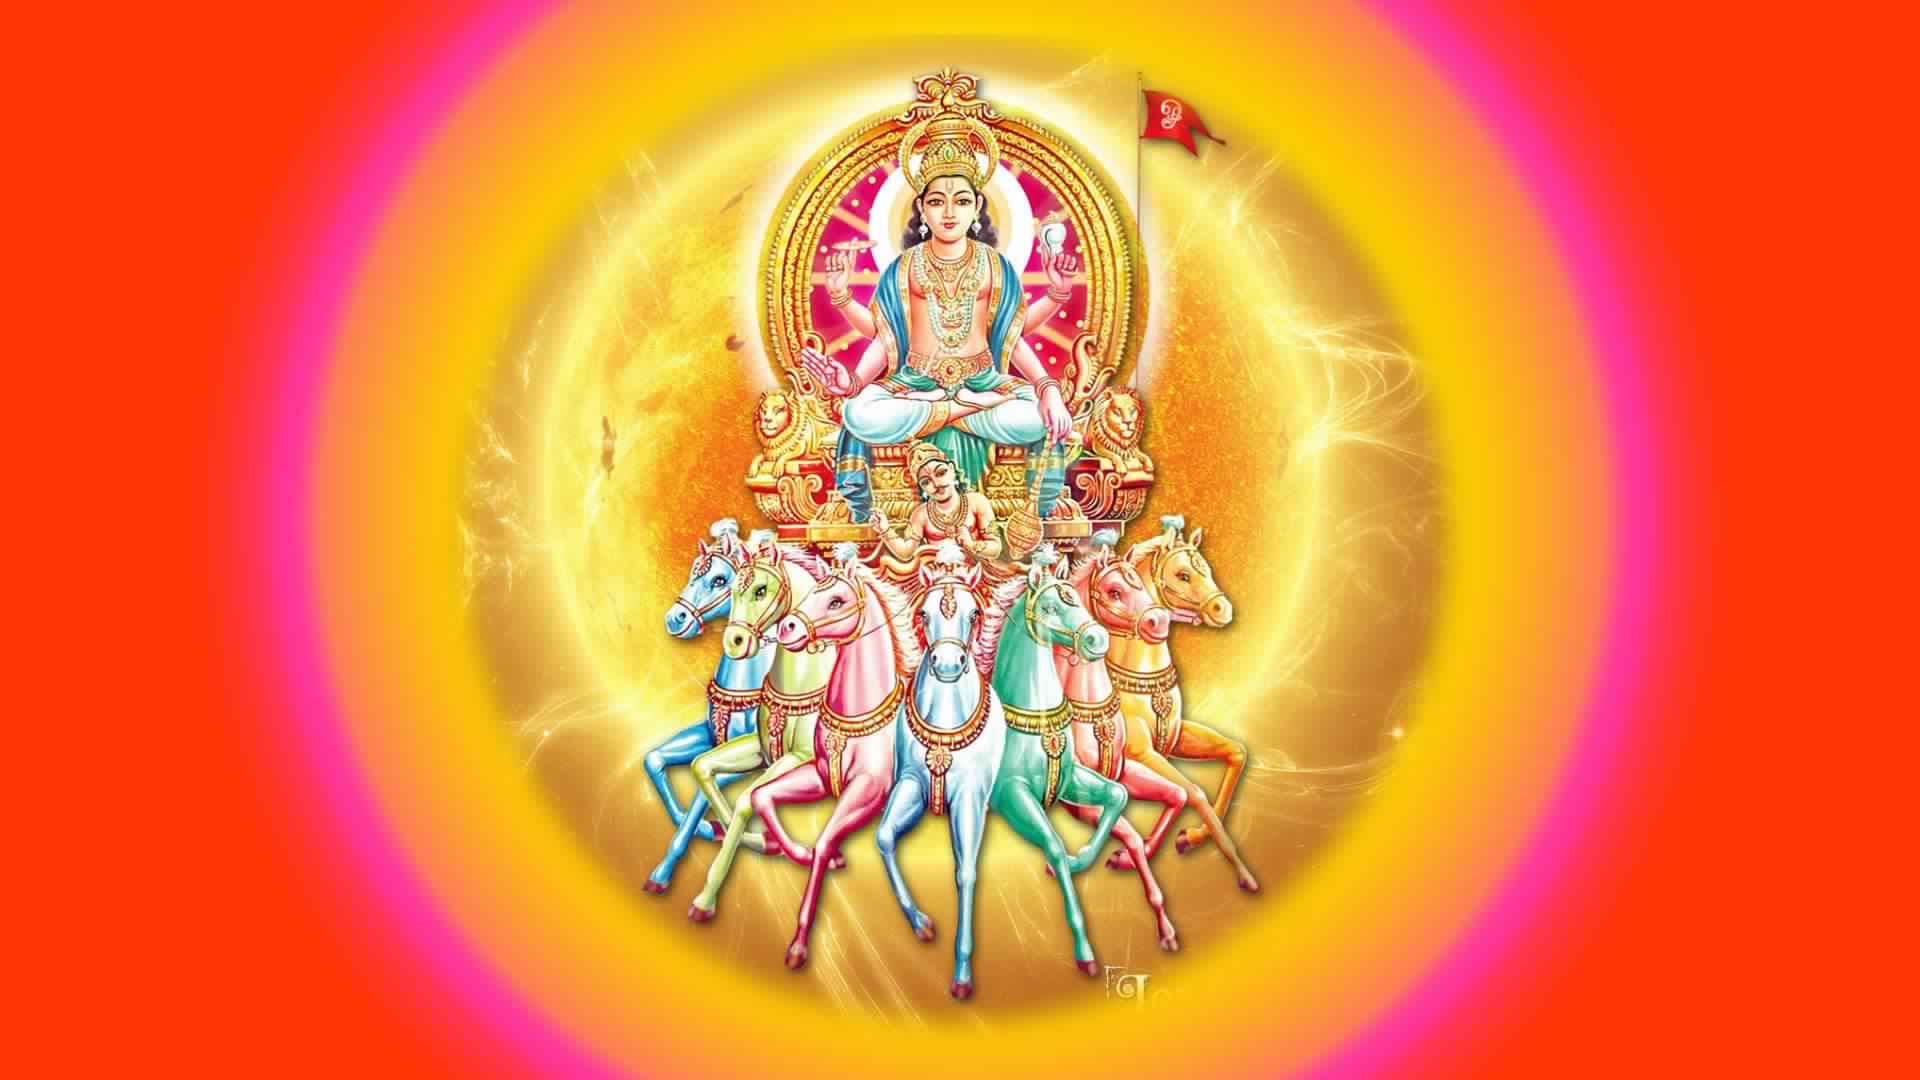 Shree Surya Dev Wallpaper. Hindu Gods and Goddesses